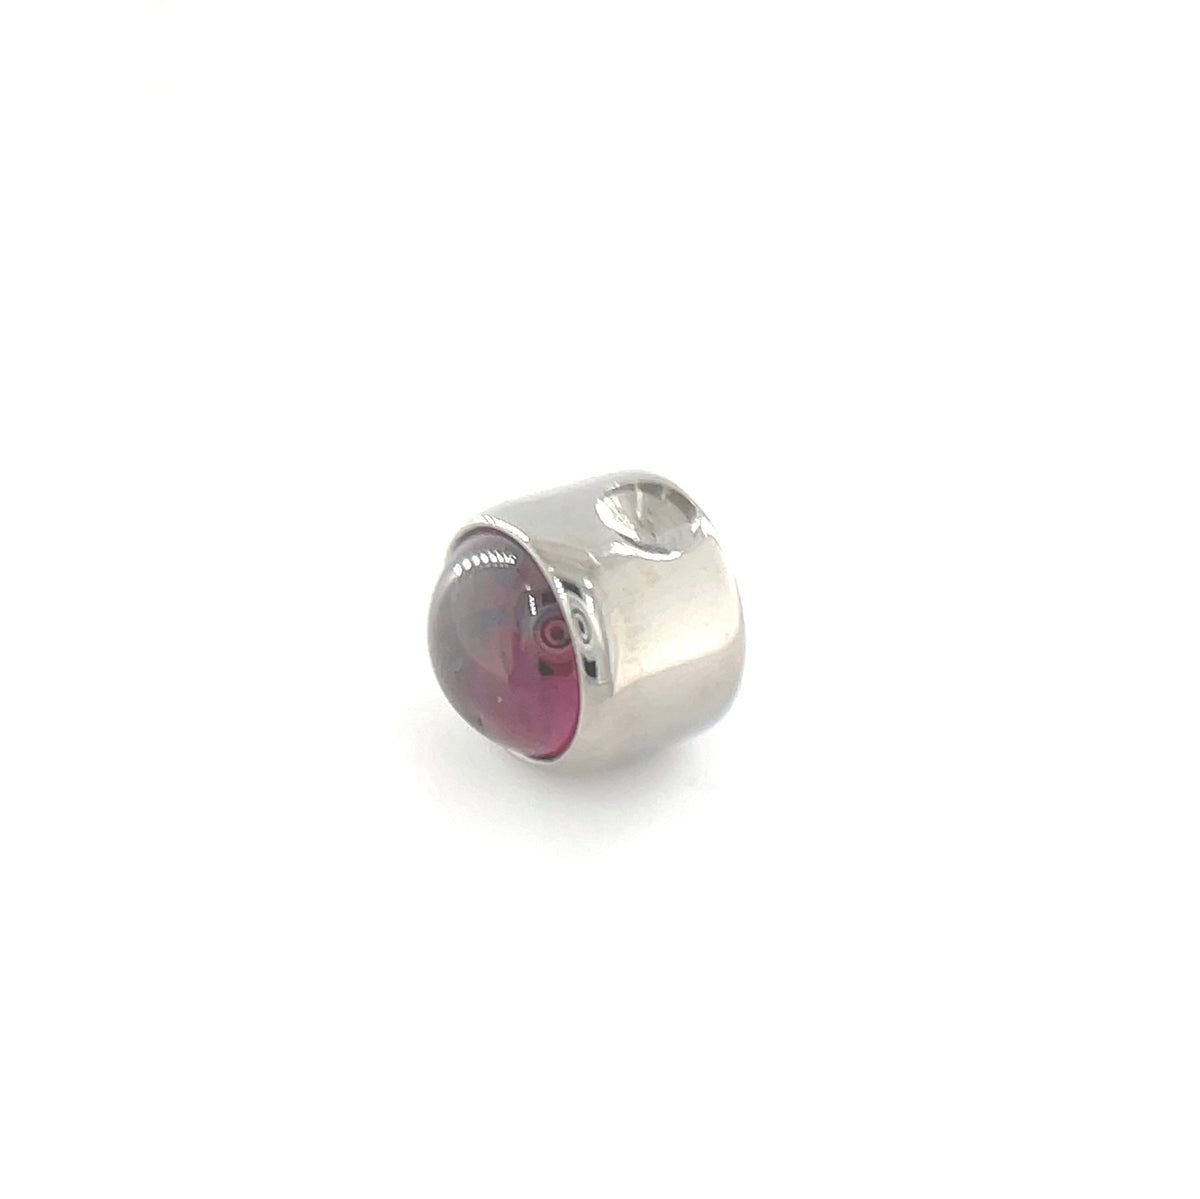 Industrial Strength Titanium Garnet Gem Captive Bead Ring